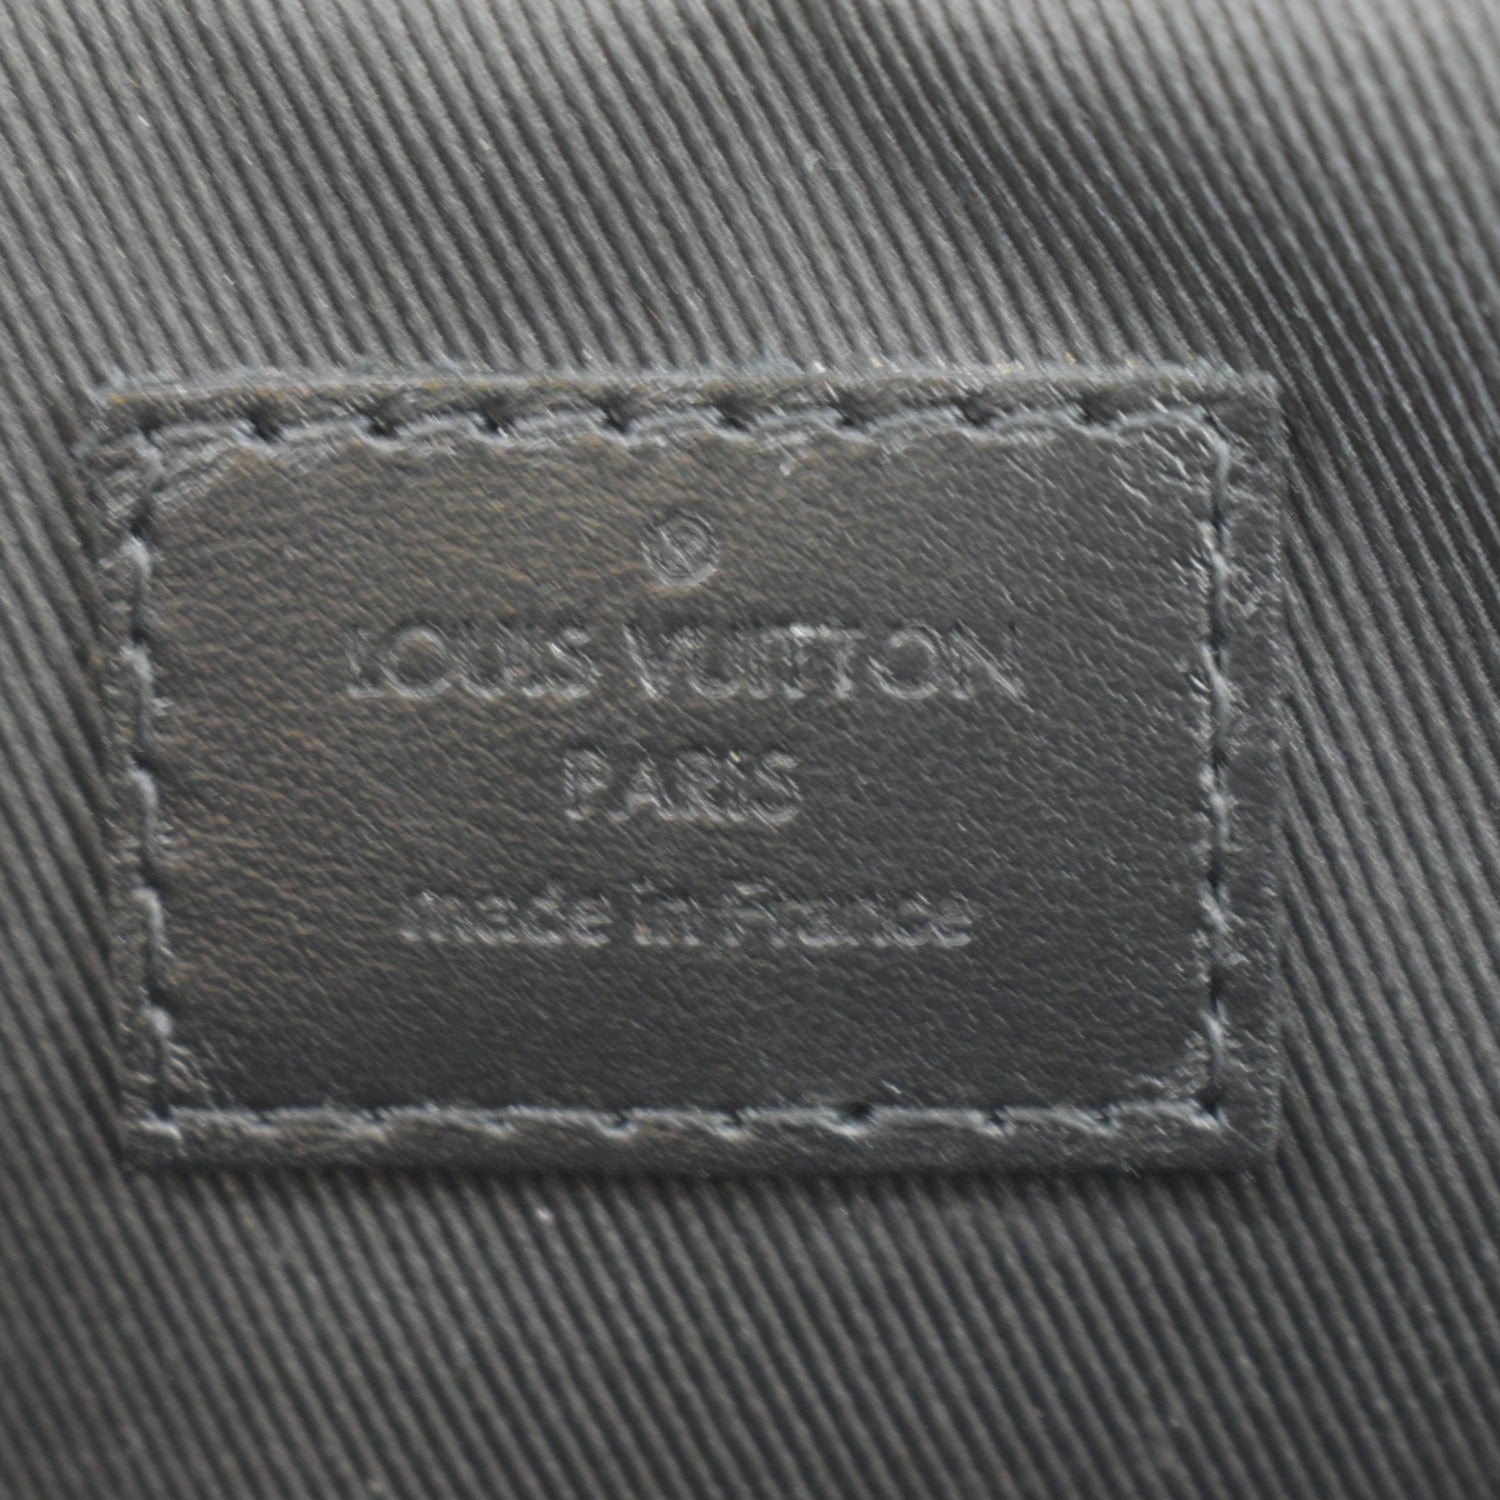 LV Emblem – Tagged Louis Vuitton– SergiosCollection